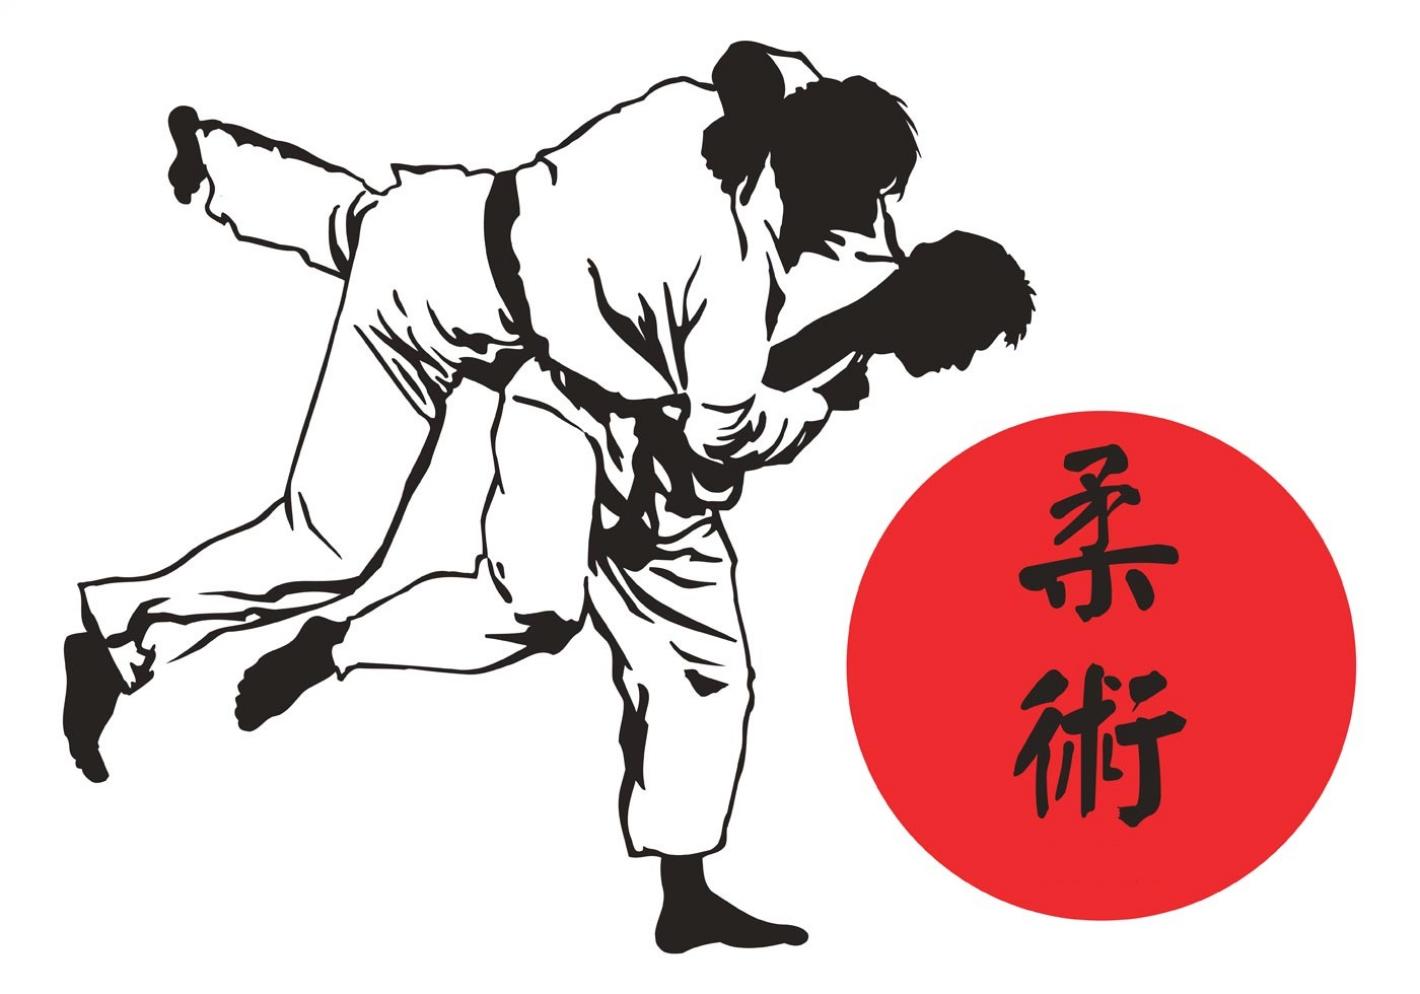 images/puglia/jujitsu/medium/free-jiu-jitsu-vector-silhouette.jpg